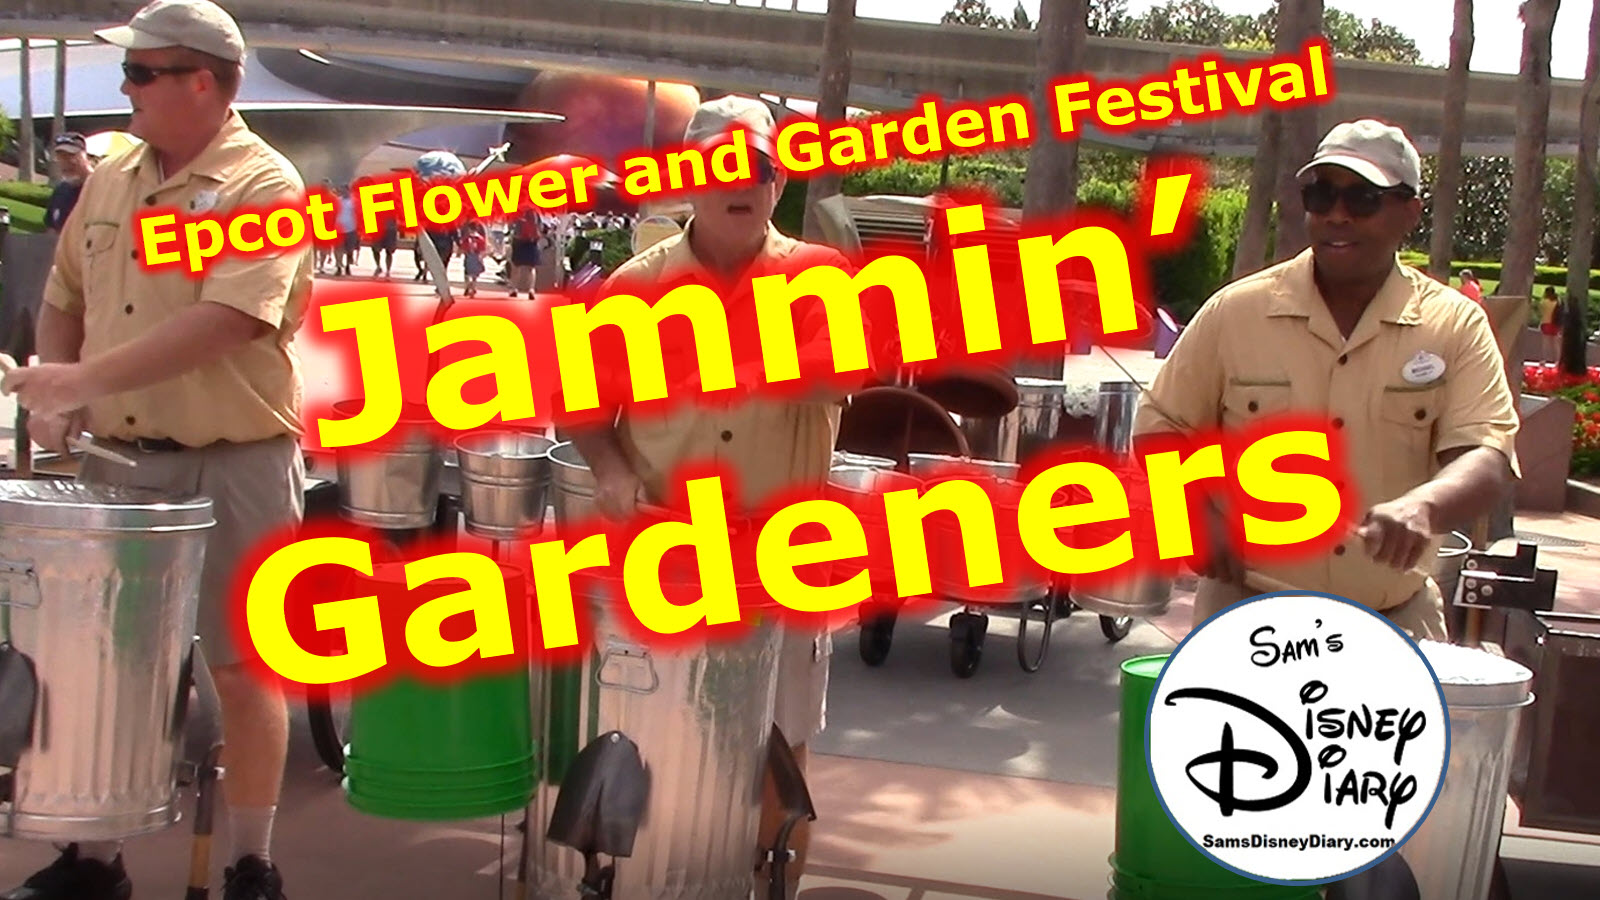 SamsDisneyDiary #115: The Epcot International Flower and Garden Festival Jammin Gardeners